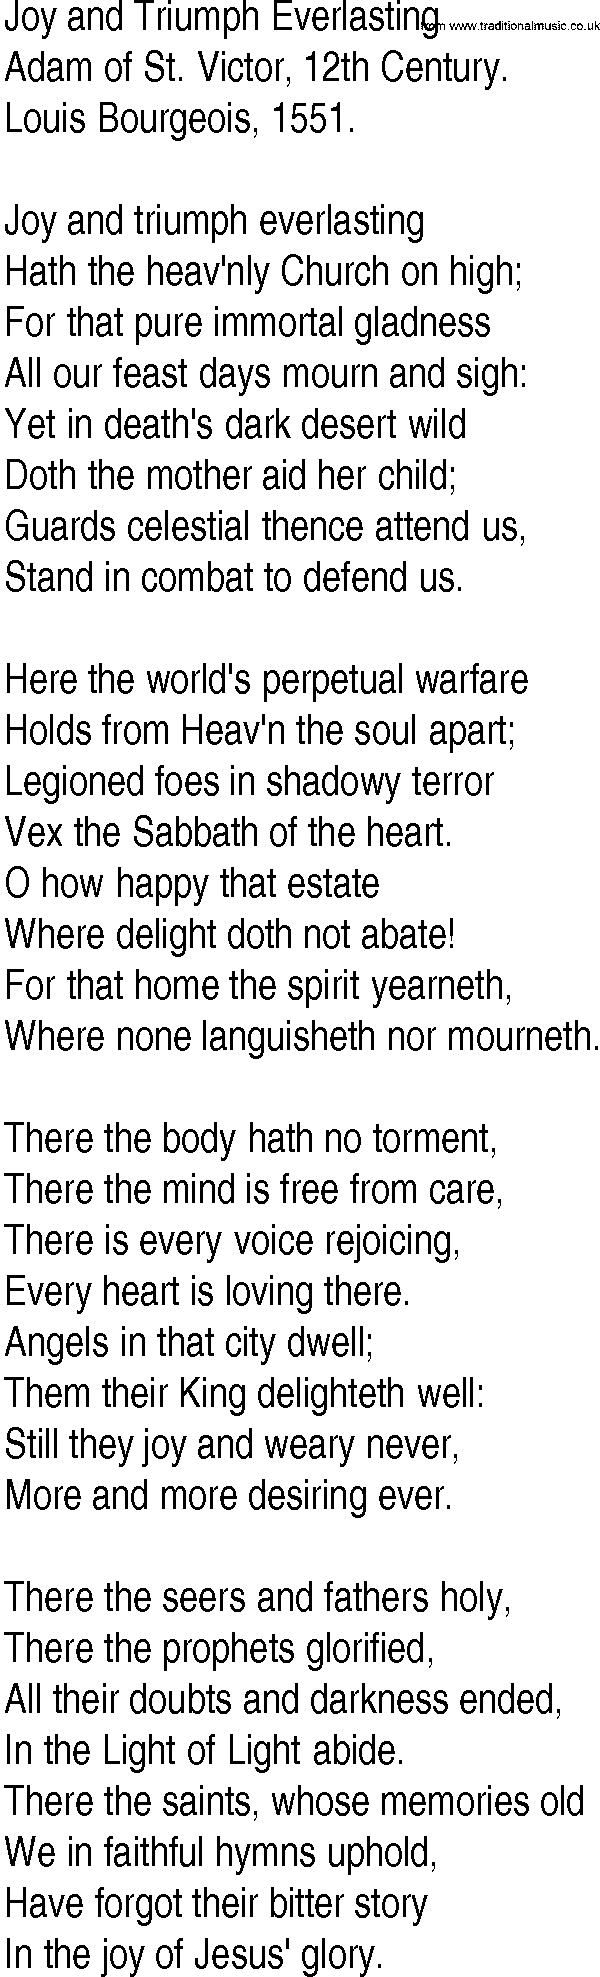 Hymn and Gospel Song: Joy and Triumph Everlasting by Adam of St Victor th Century lyrics